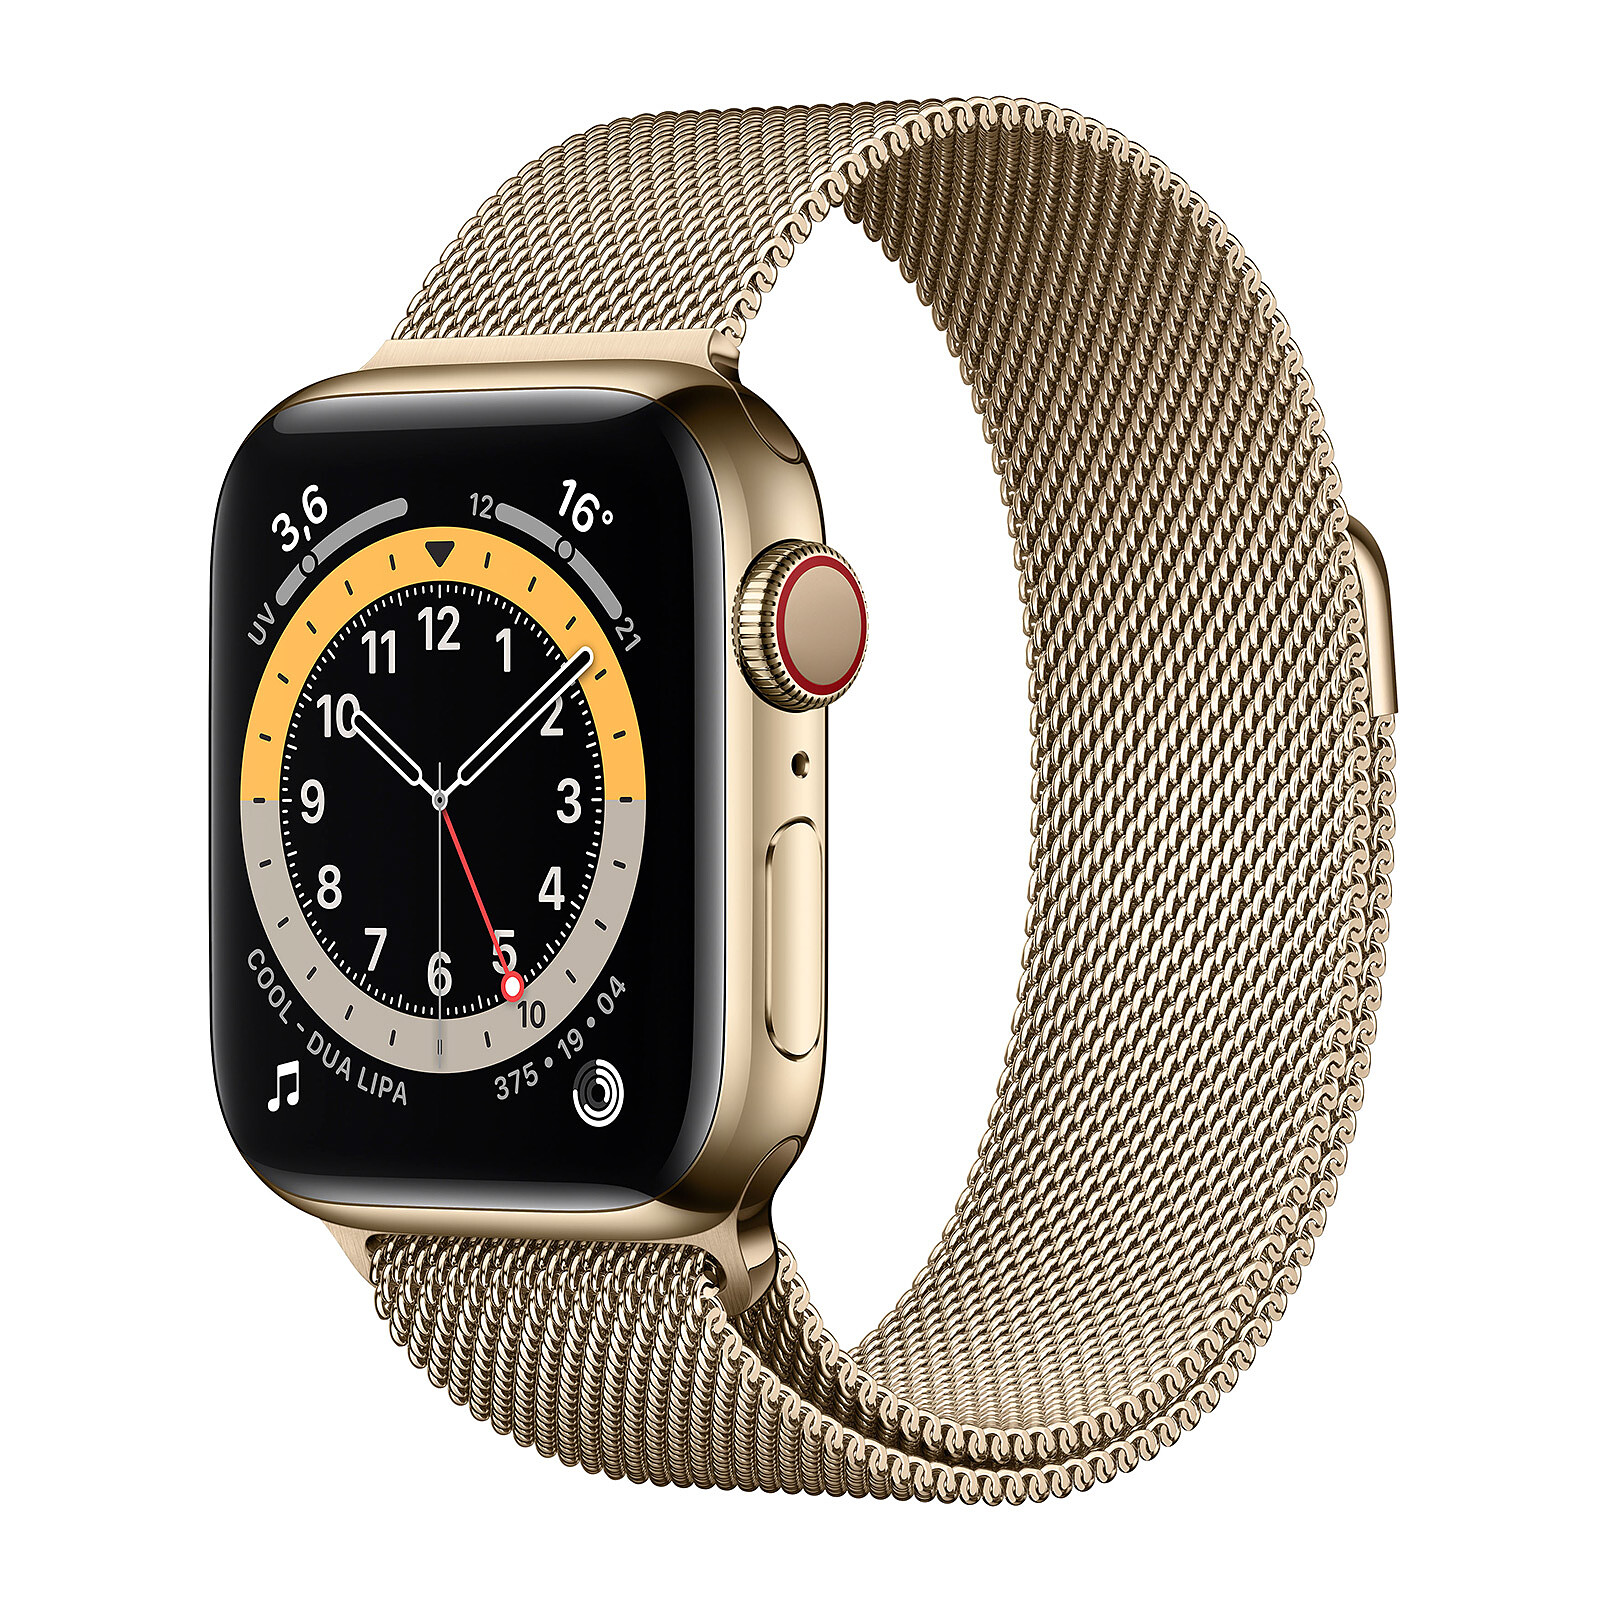 Apple Watch Series 6 GPS Cellular Stainless steel Gold Milanese Loop 40